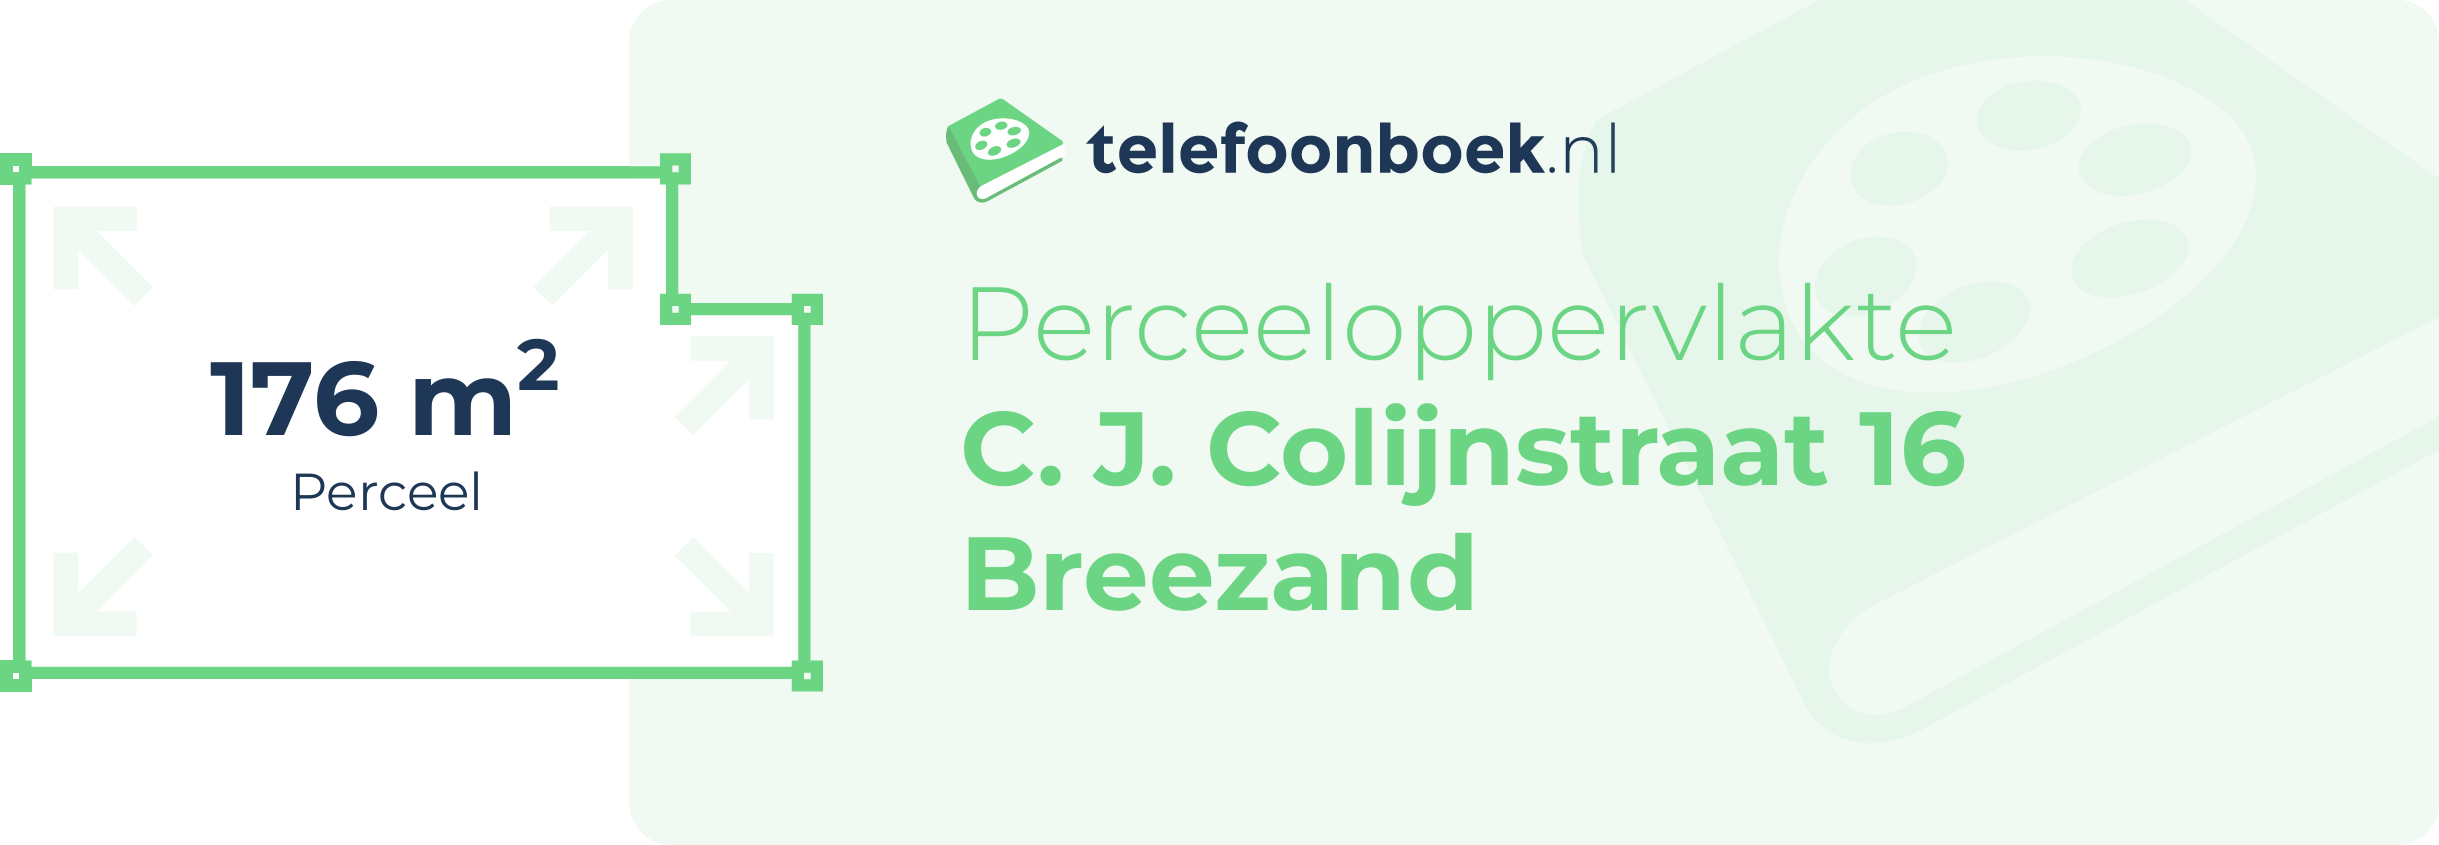 Perceeloppervlakte C. J. Colijnstraat 16 Breezand